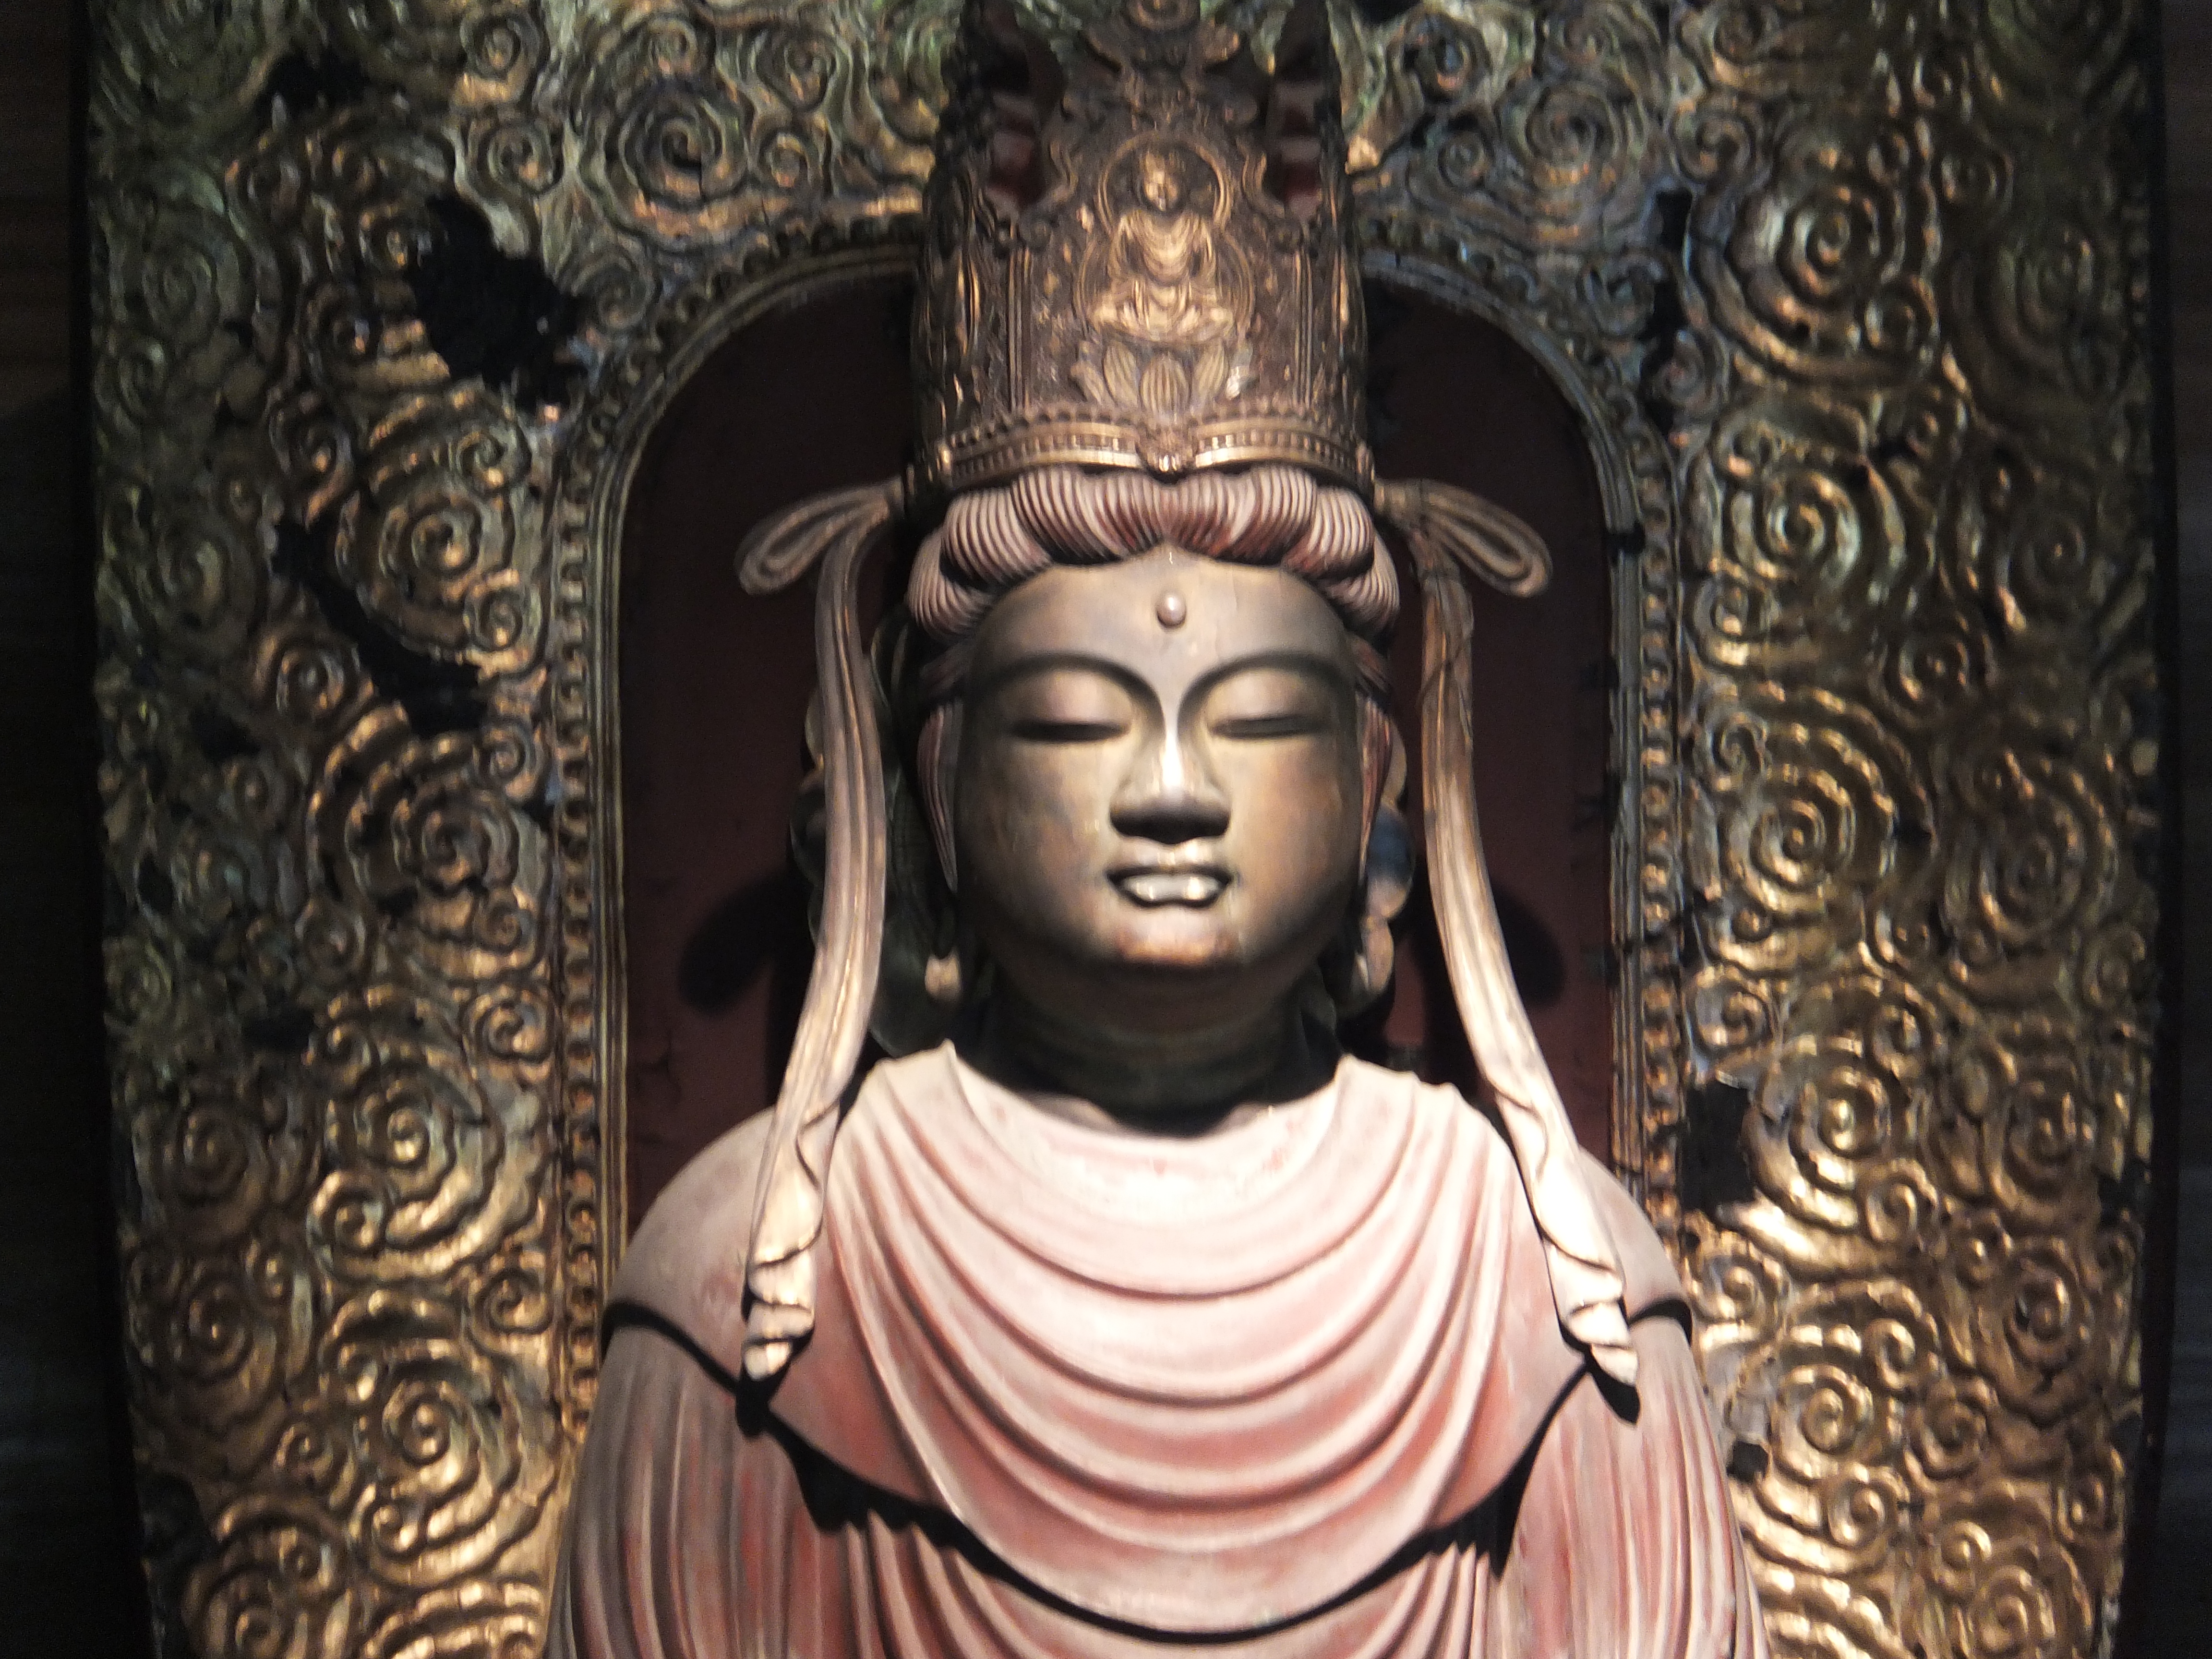 世界遺産 平泉 毛越寺常行堂 宝冠阿弥陀如来 World Heritage Motuuji Temple Buddha Statue Crowned Amida Nyorai 写真の旅 世界 日本 無料壁紙 Free Photo Wallpaper Japan World